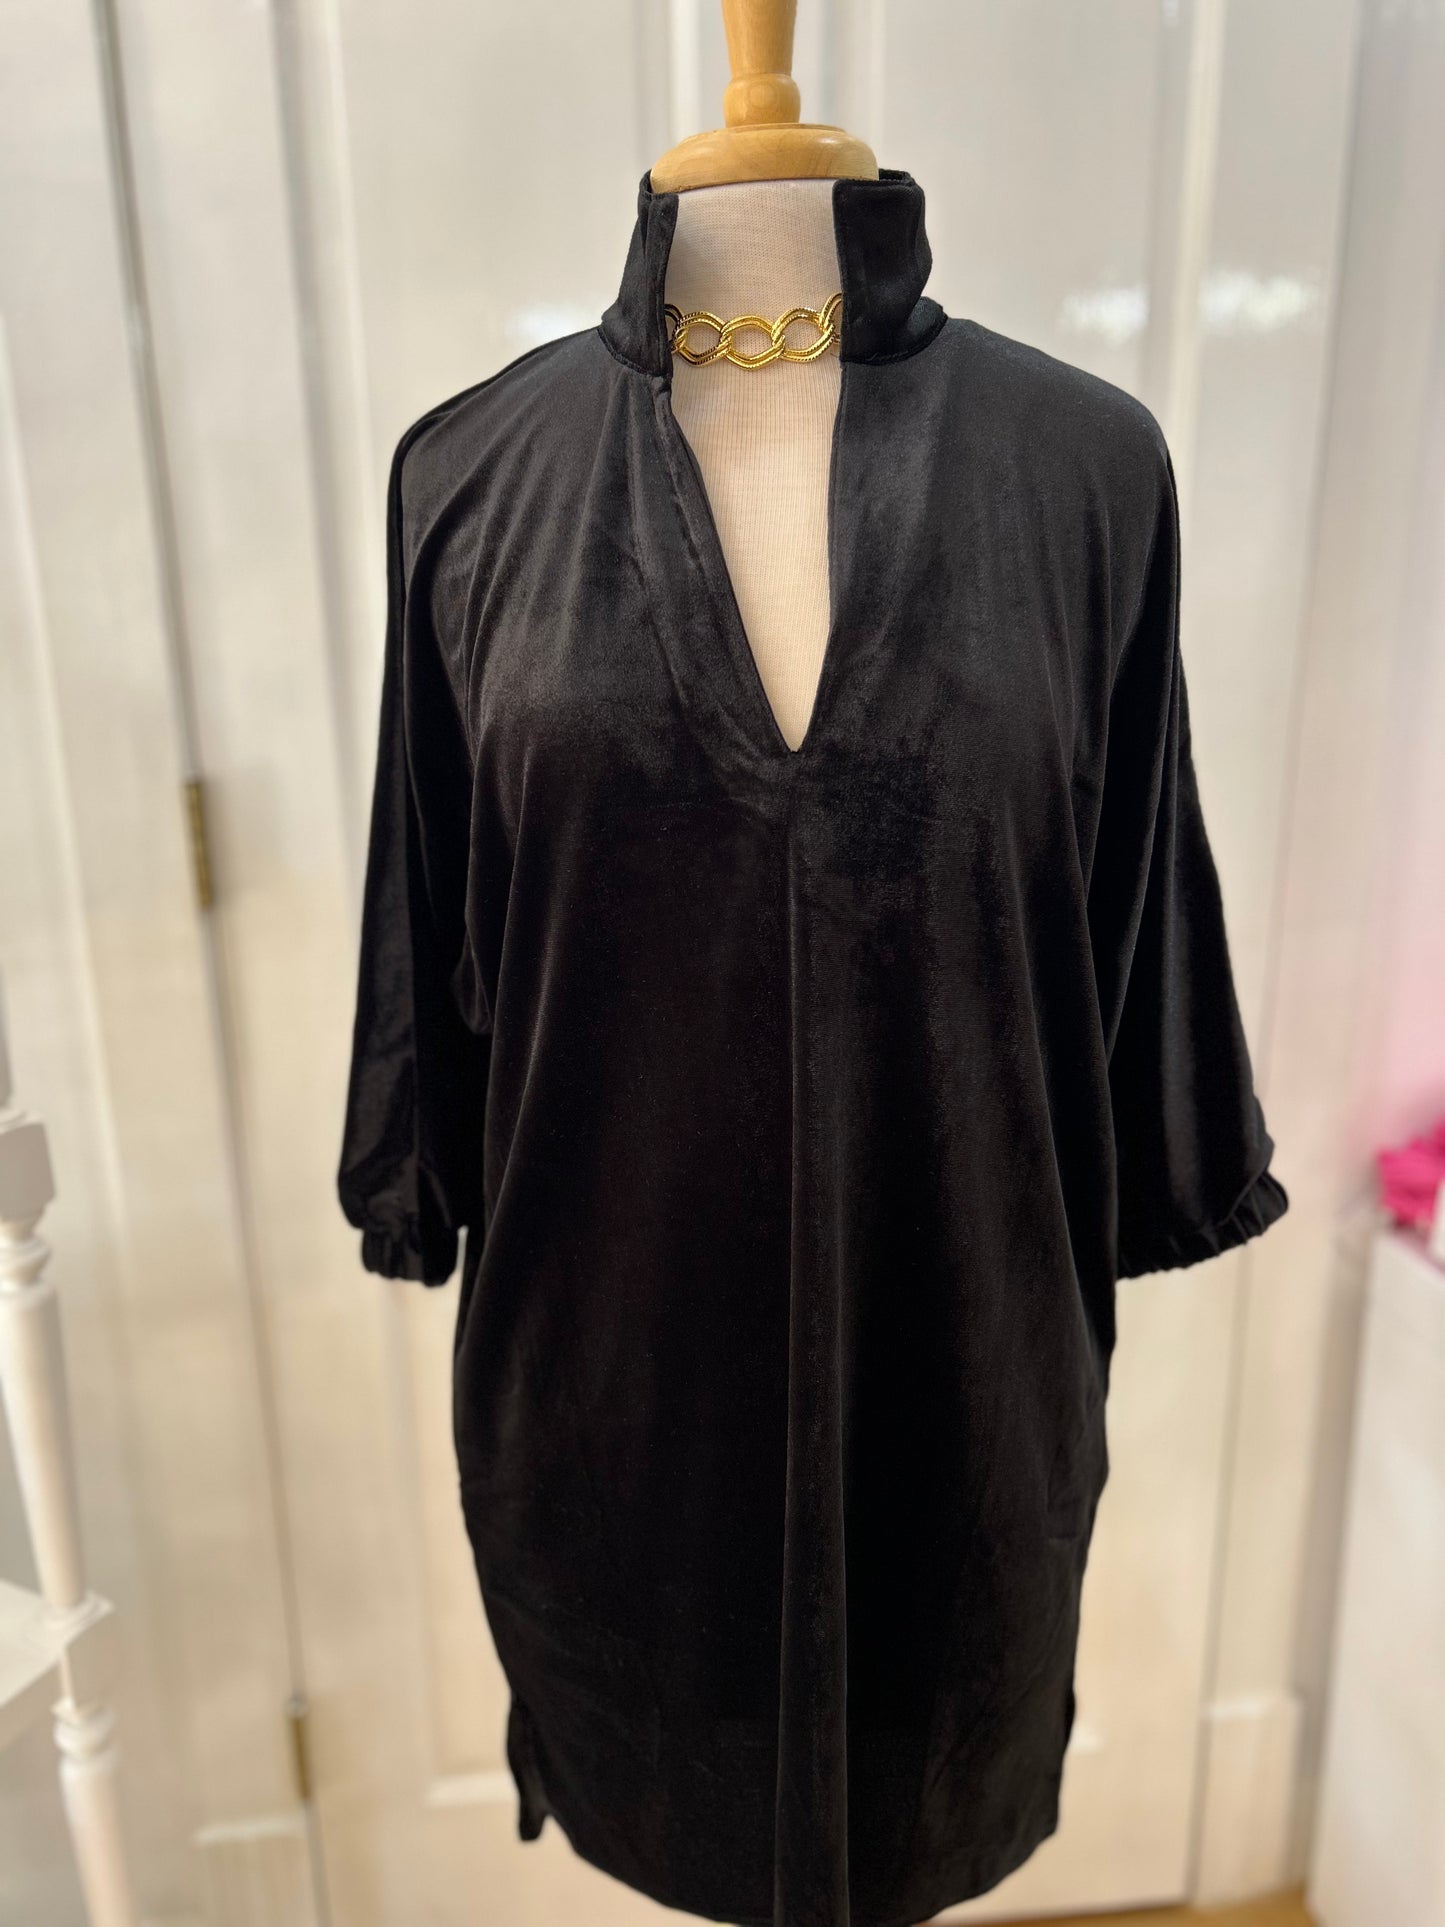 Caryn Lawn Betsy Collar Velvet Dress Black